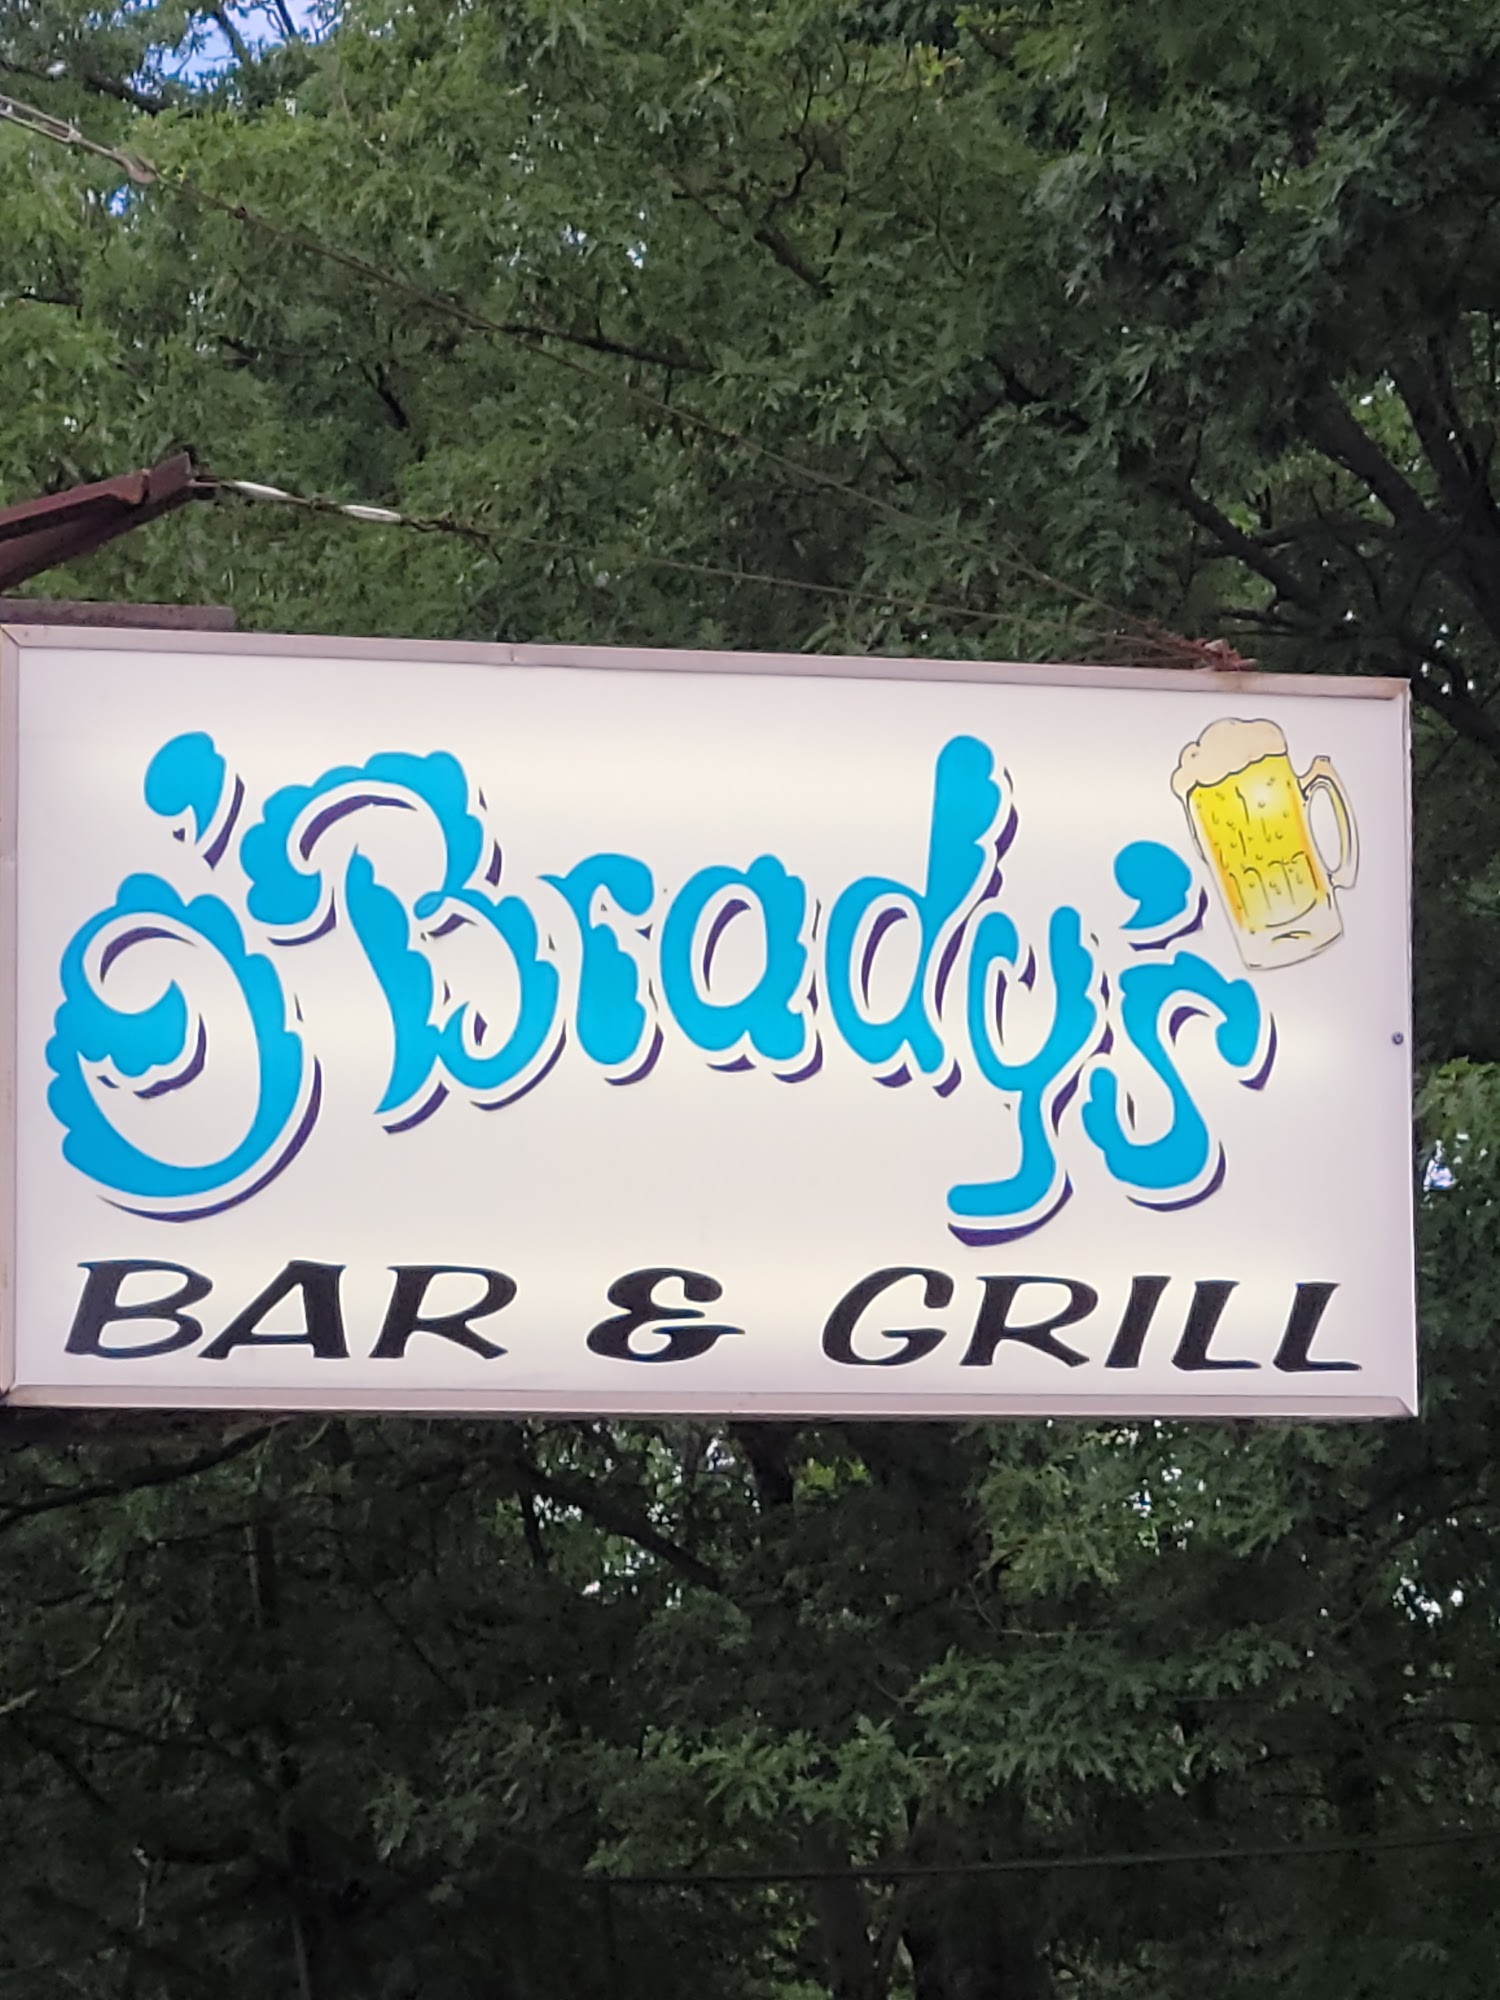 O'Brady's Bar & Grill